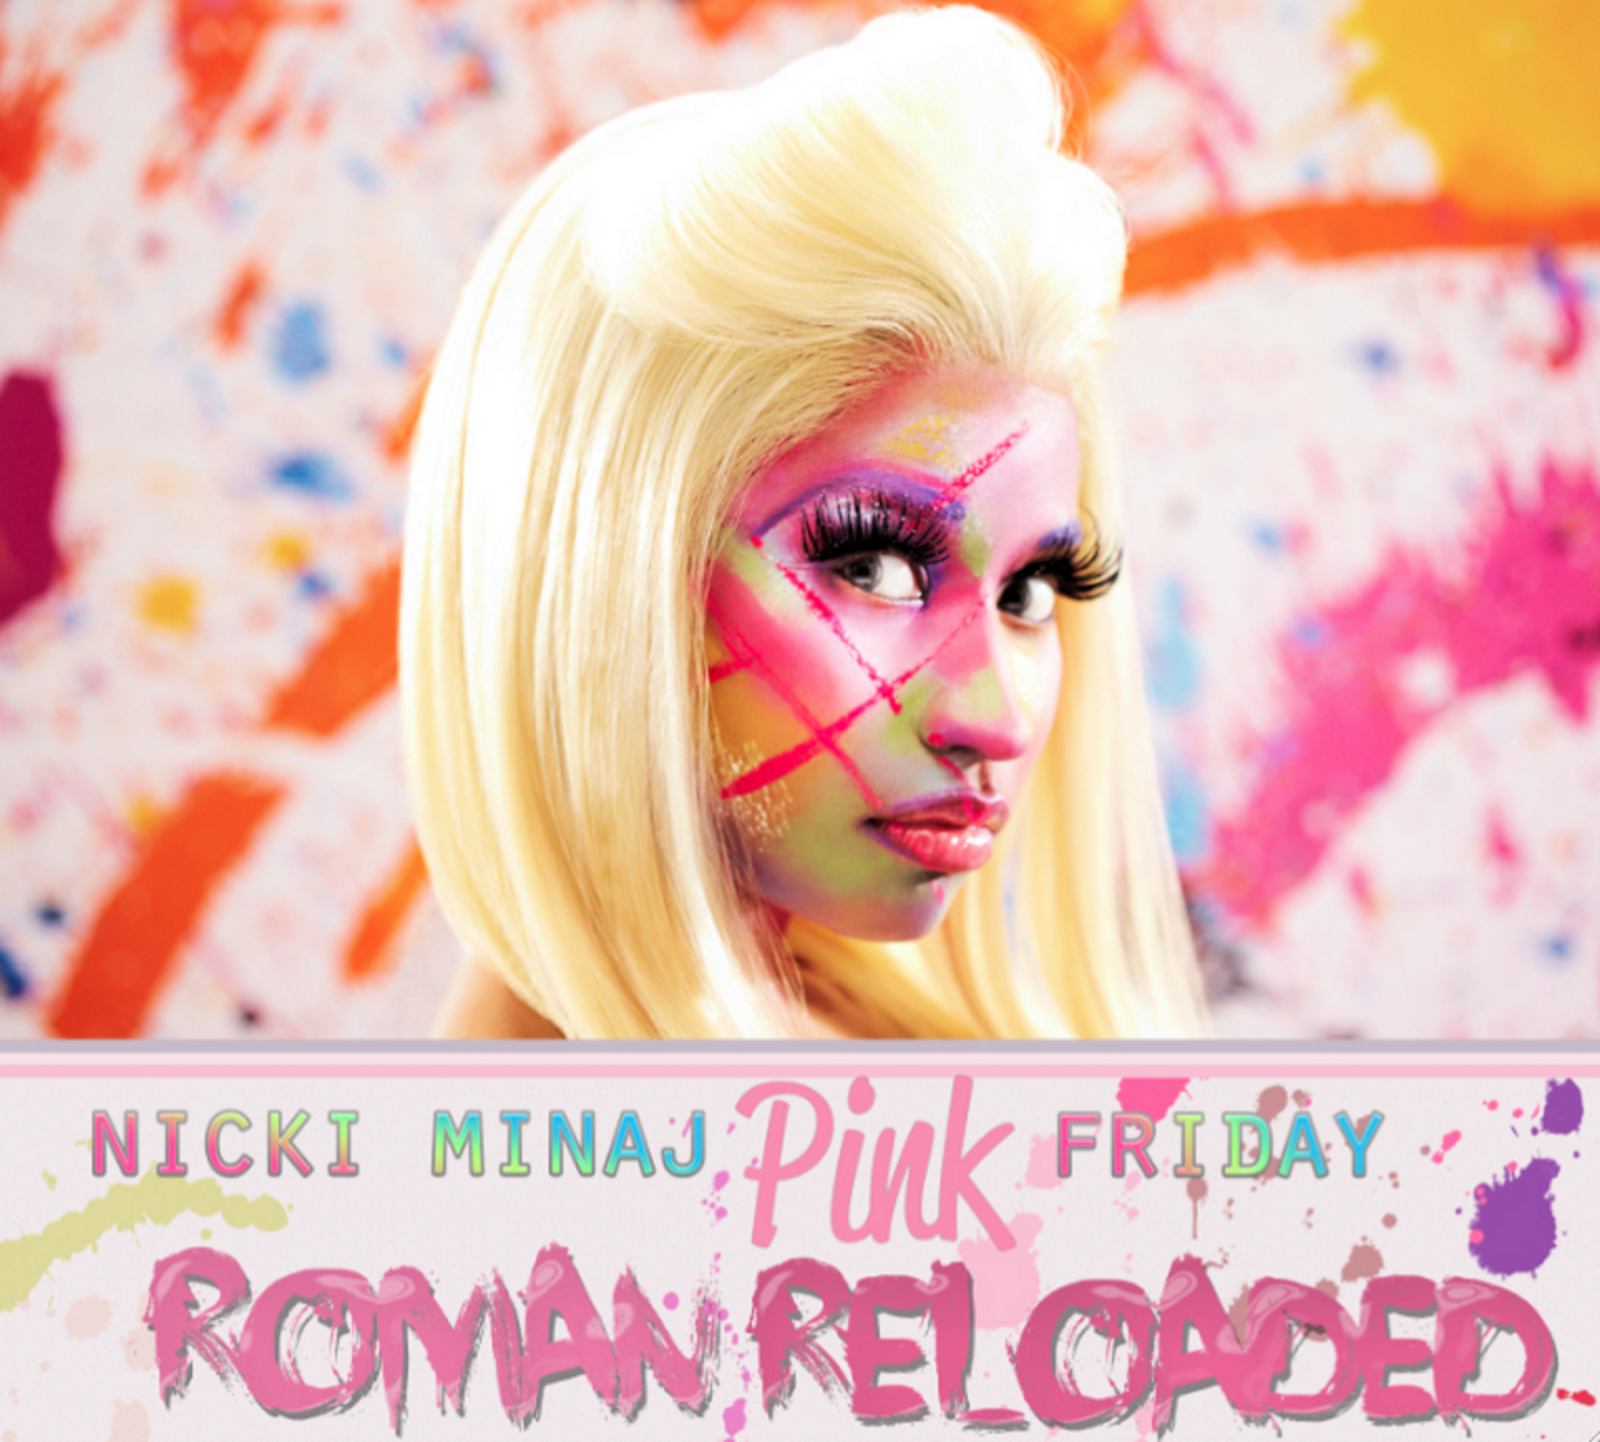 http://1.bp.blogspot.com/-lu8-oJVrraw/T1qMlTzNSRI/AAAAAAAACgY/kwWUxDzCjoY/s1600/Nicki+Minaj+-+Pink+Friday.+Roman+Reloaded.png